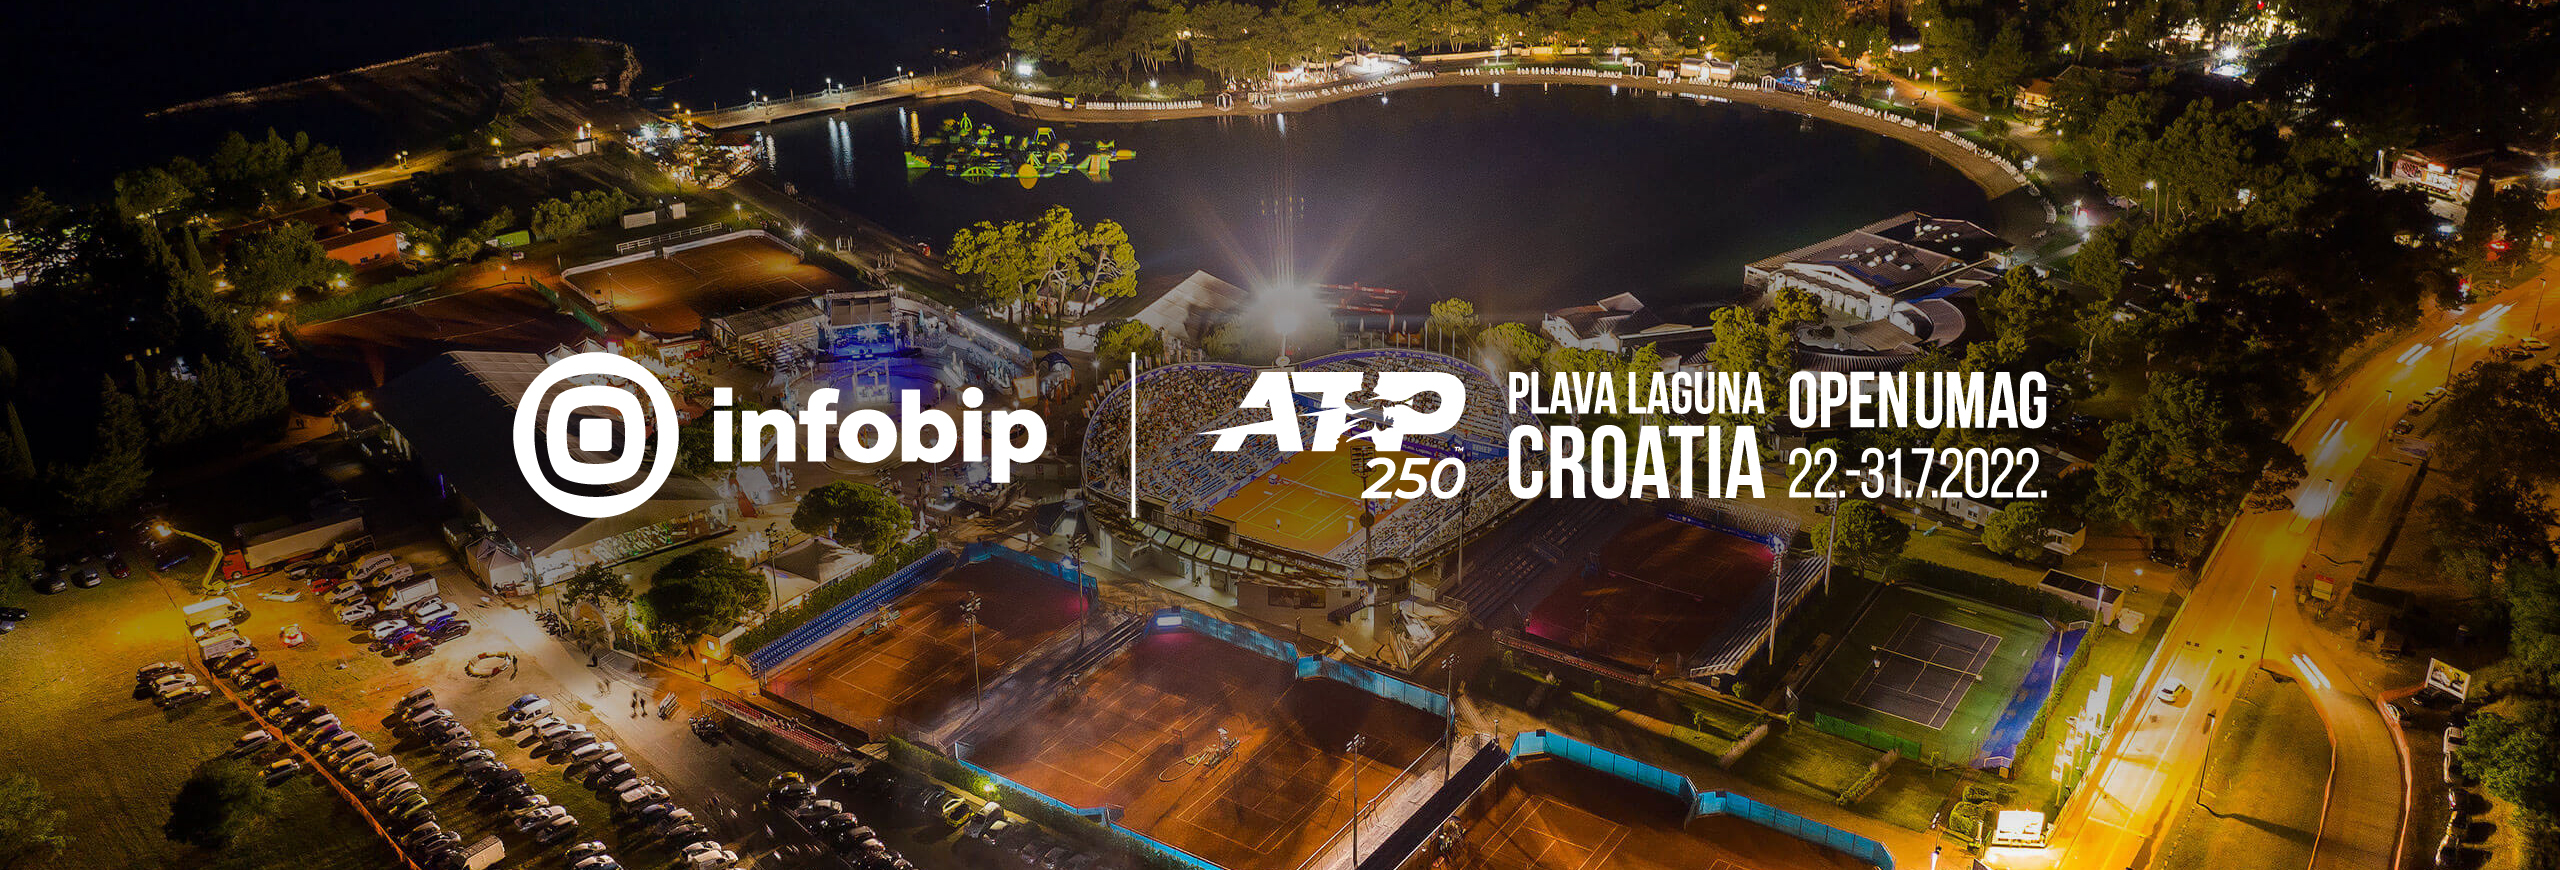 Chatbot serves up live updates at Croatian tennis tournament Mobile Marketing Magazine